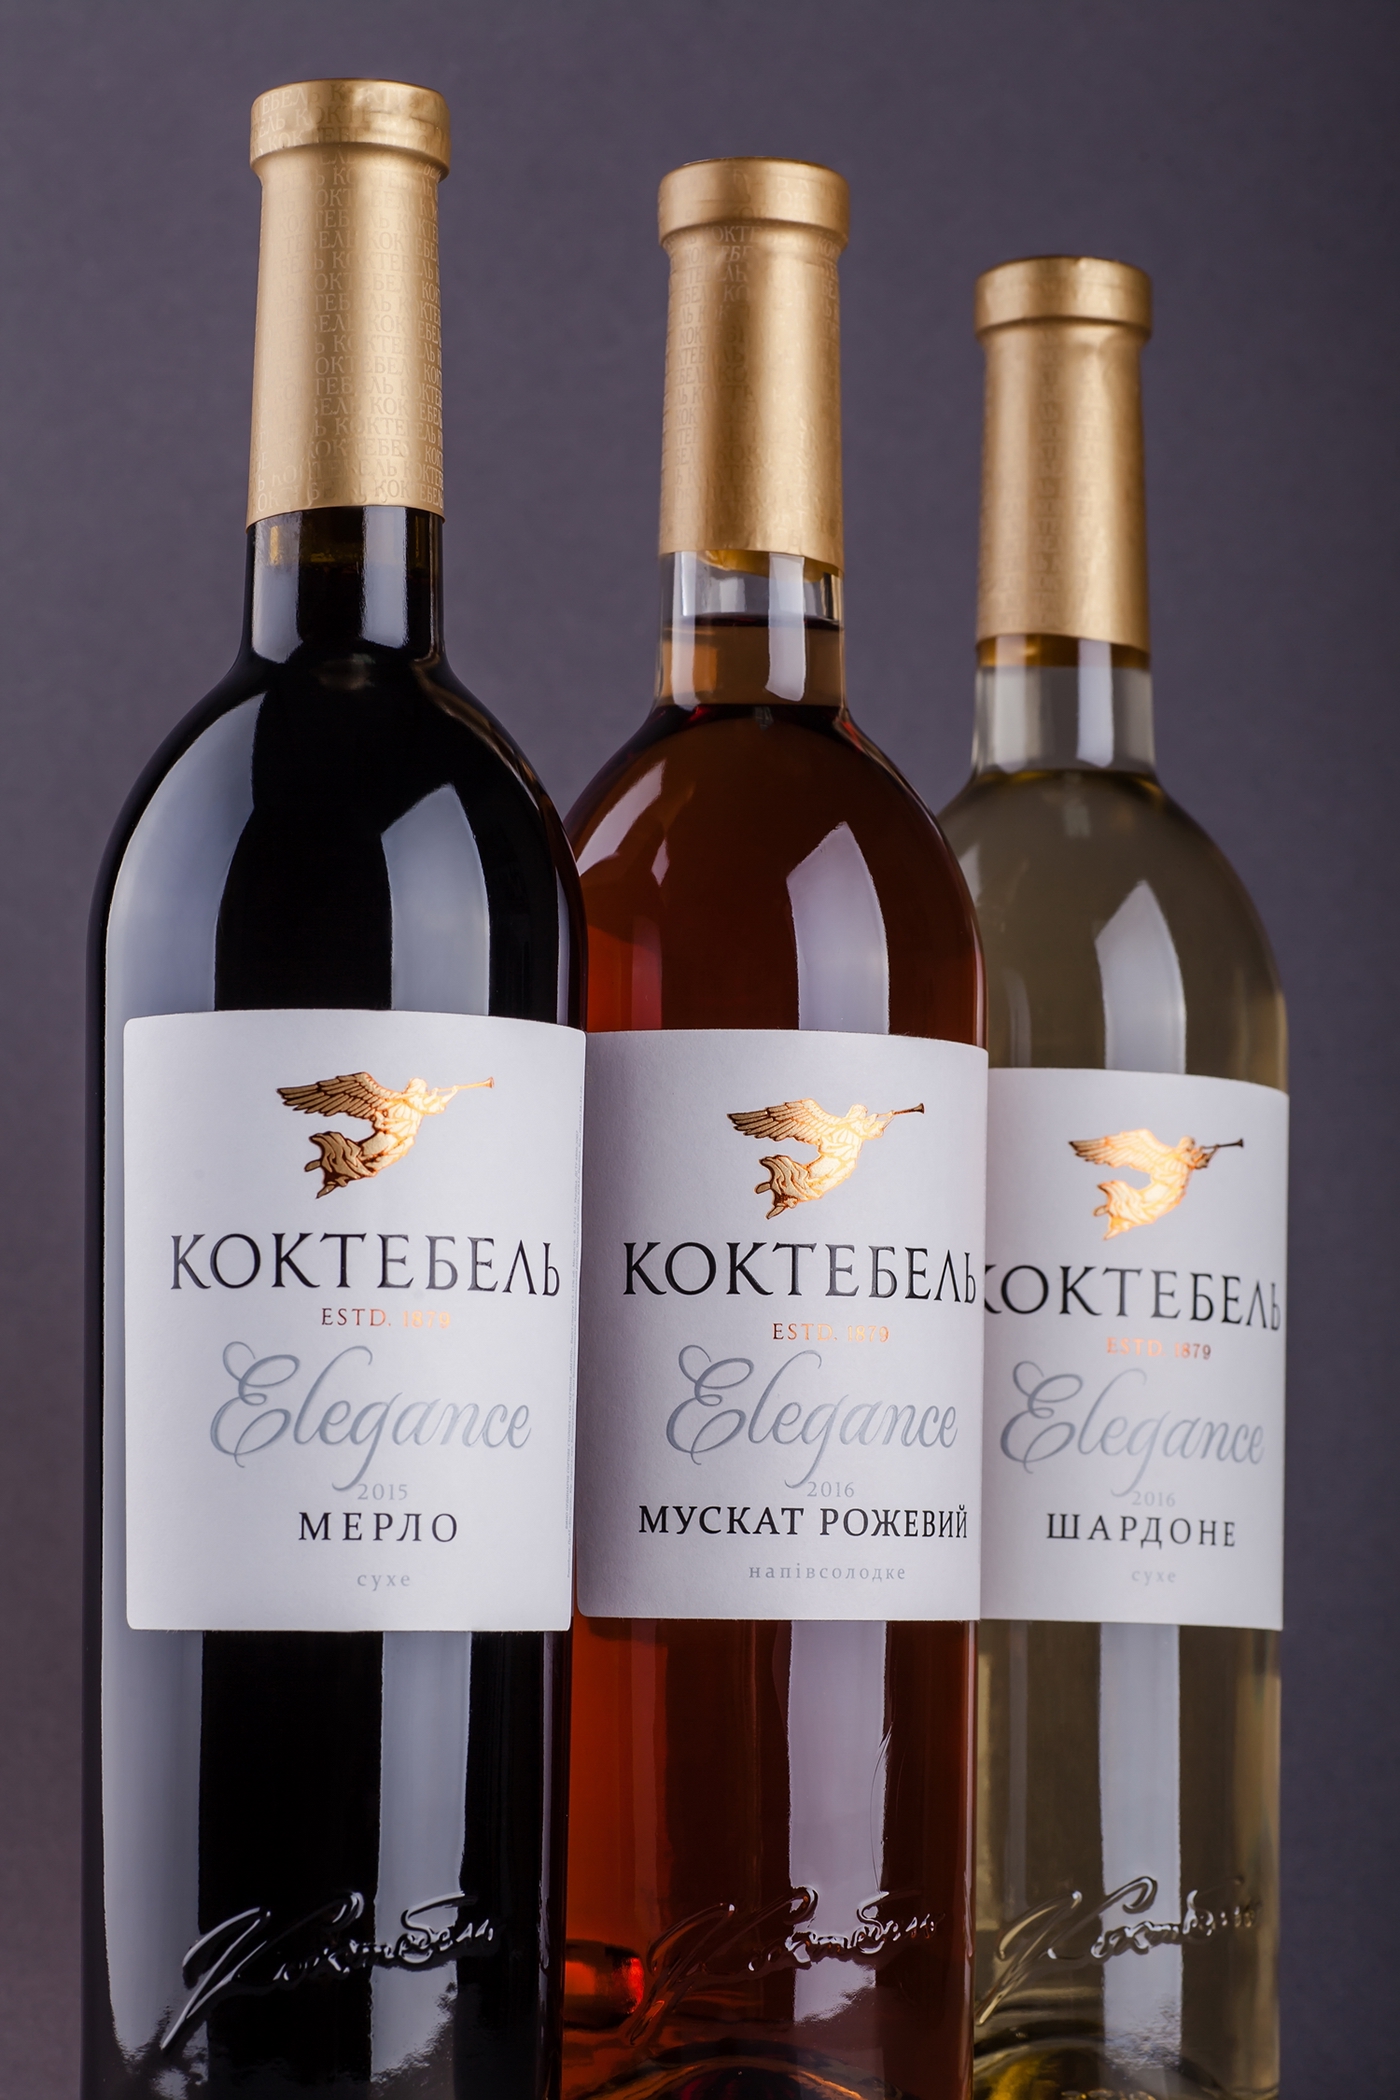 Koktebel wine label label design Packaging 43oz design studio